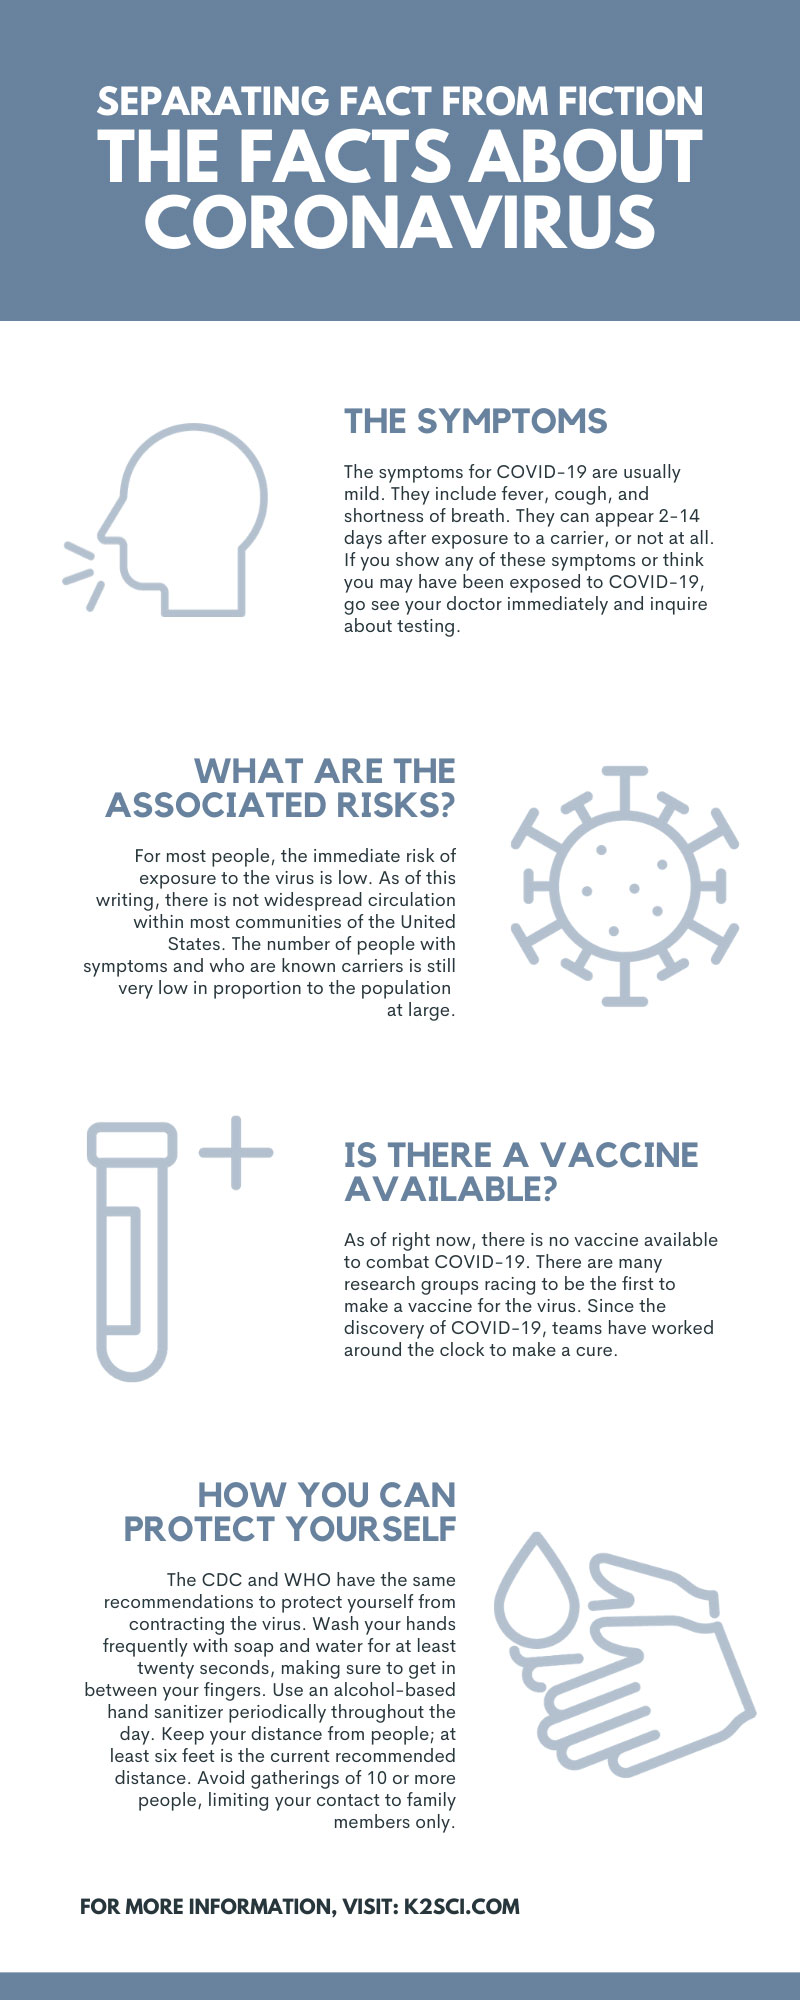 The Facts About Coronavirus